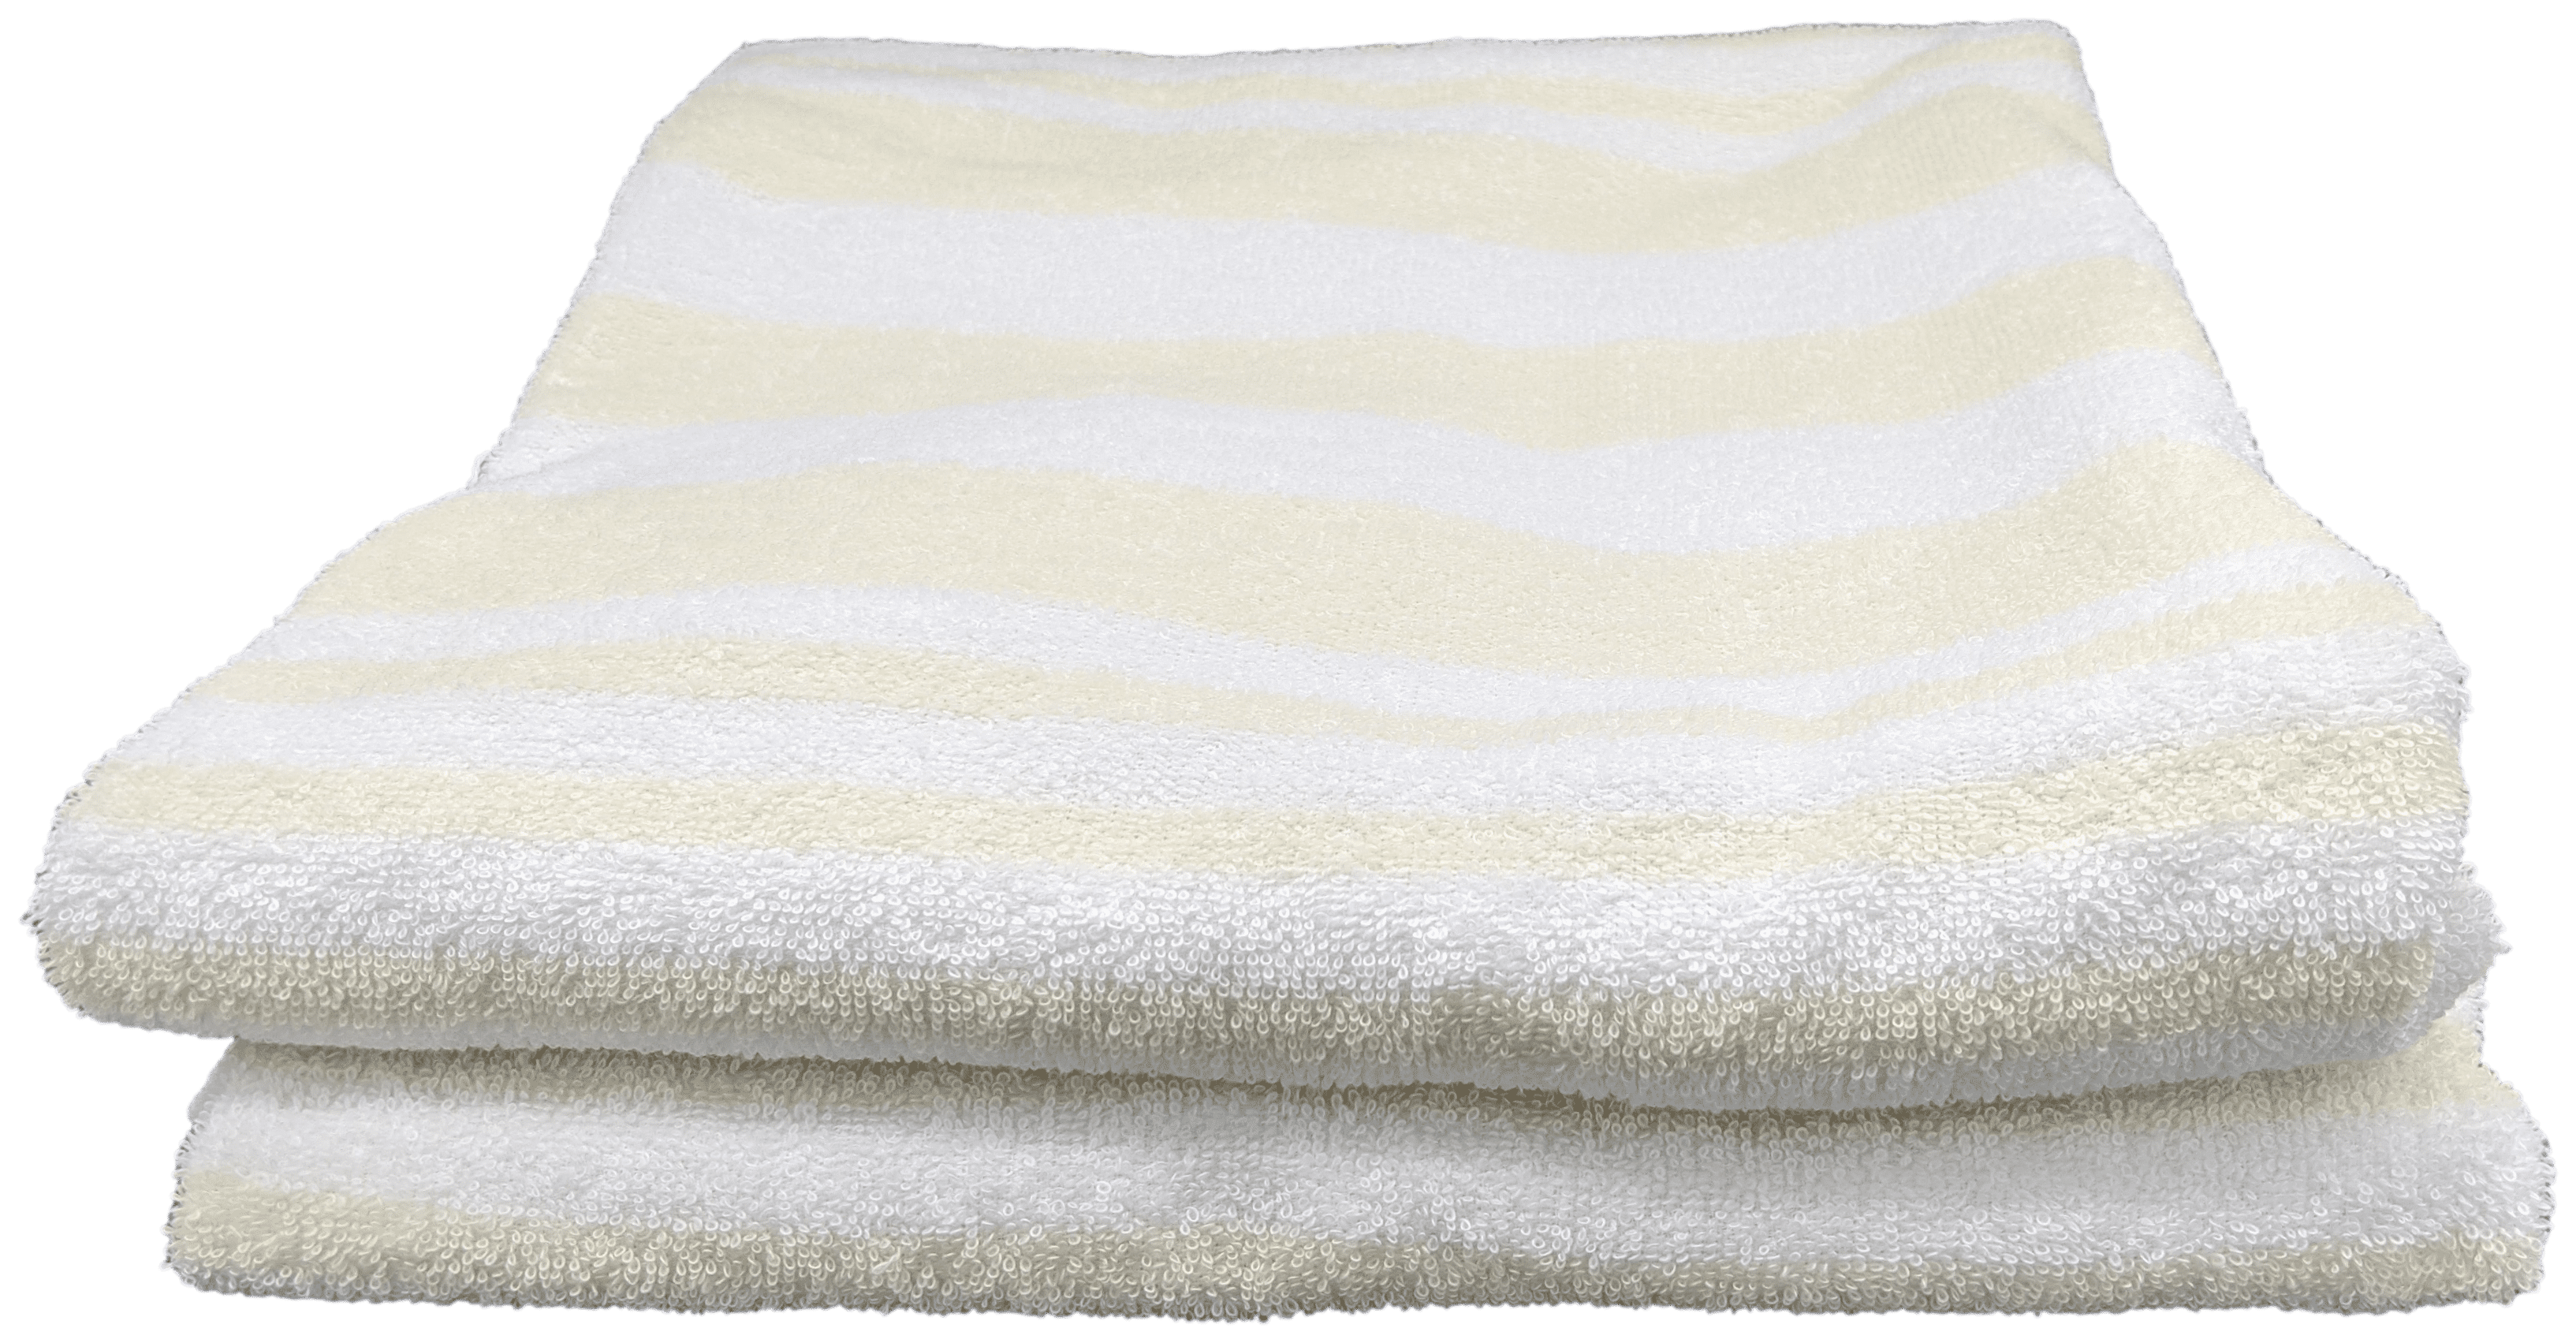 Hotel & Spa Towel 100% Ring Spun Cotton Pool Beach Striped Towels 30 x 70 360GSM 